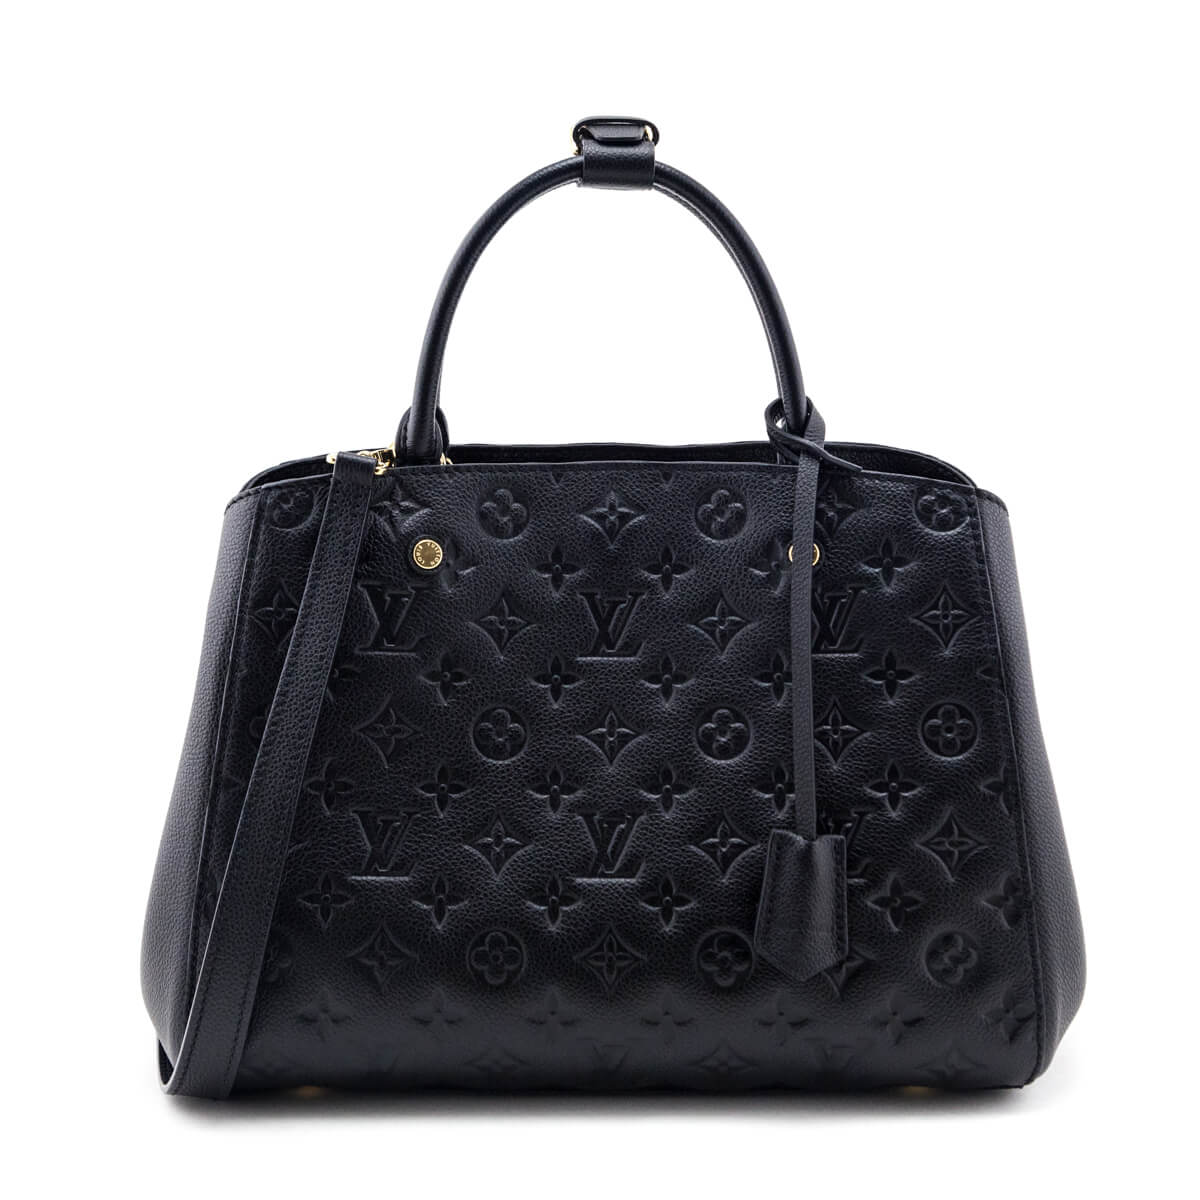 Louis Vuitton - Authenticated Montaigne Handbag - Leather Black Plain for Women, Very Good Condition